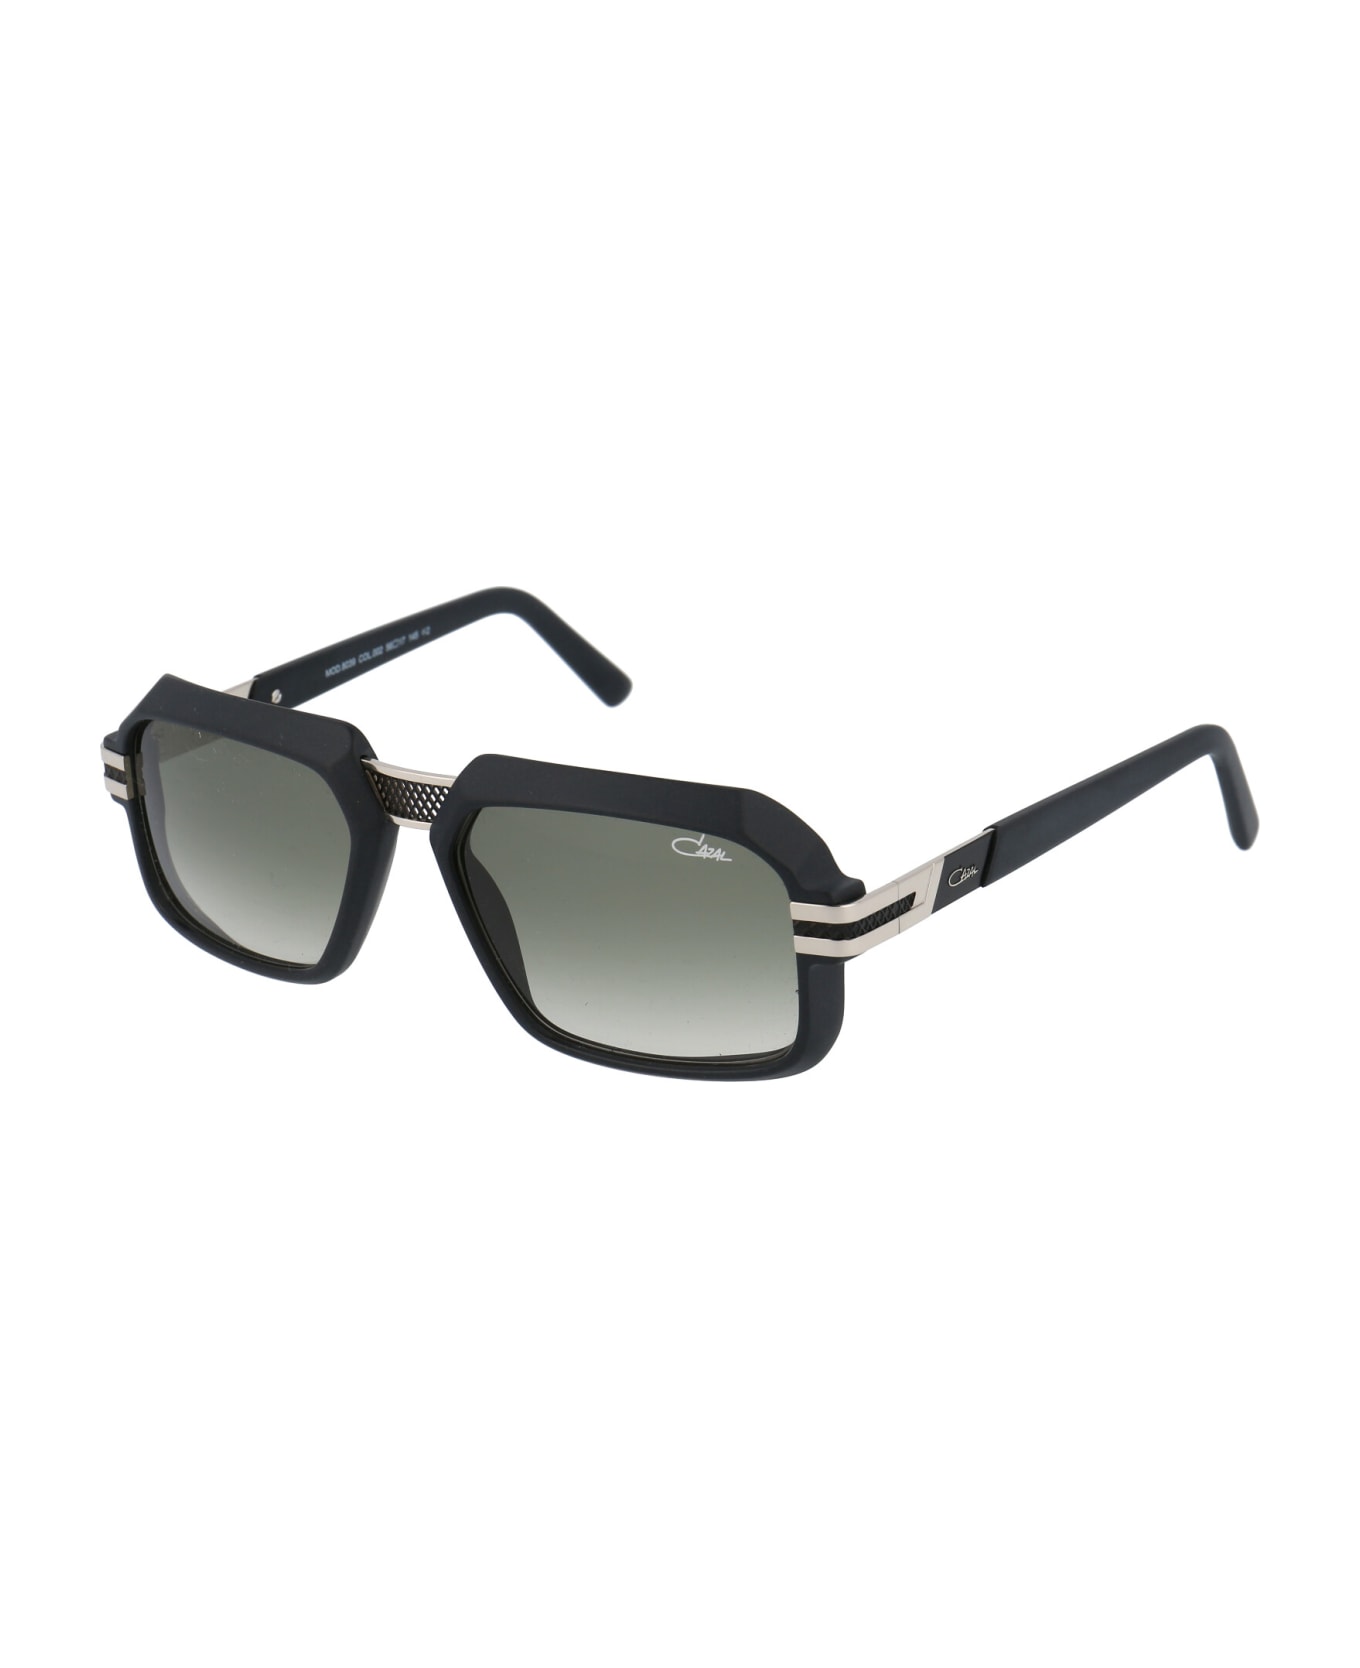 Cazal Mod. 8039 Sunglasses - BLACK MATTE